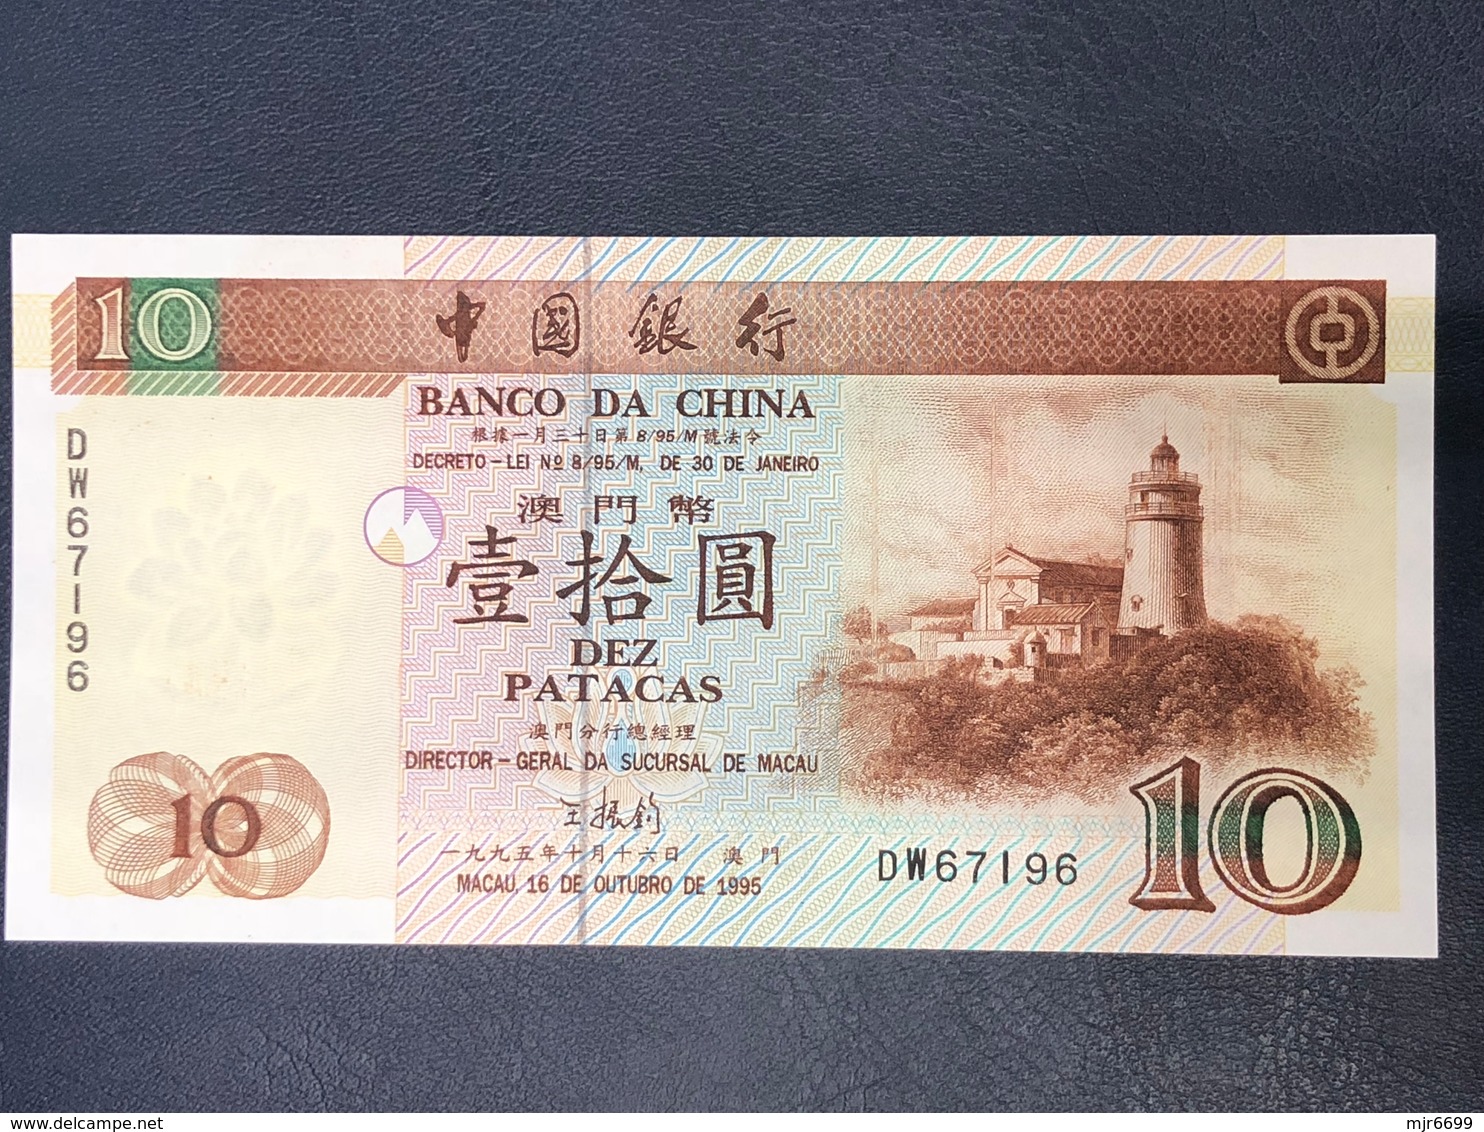 MACAU 1995 10 PATACAS BANK OF CHINA, SERIAL DW67196, UNC - Macao